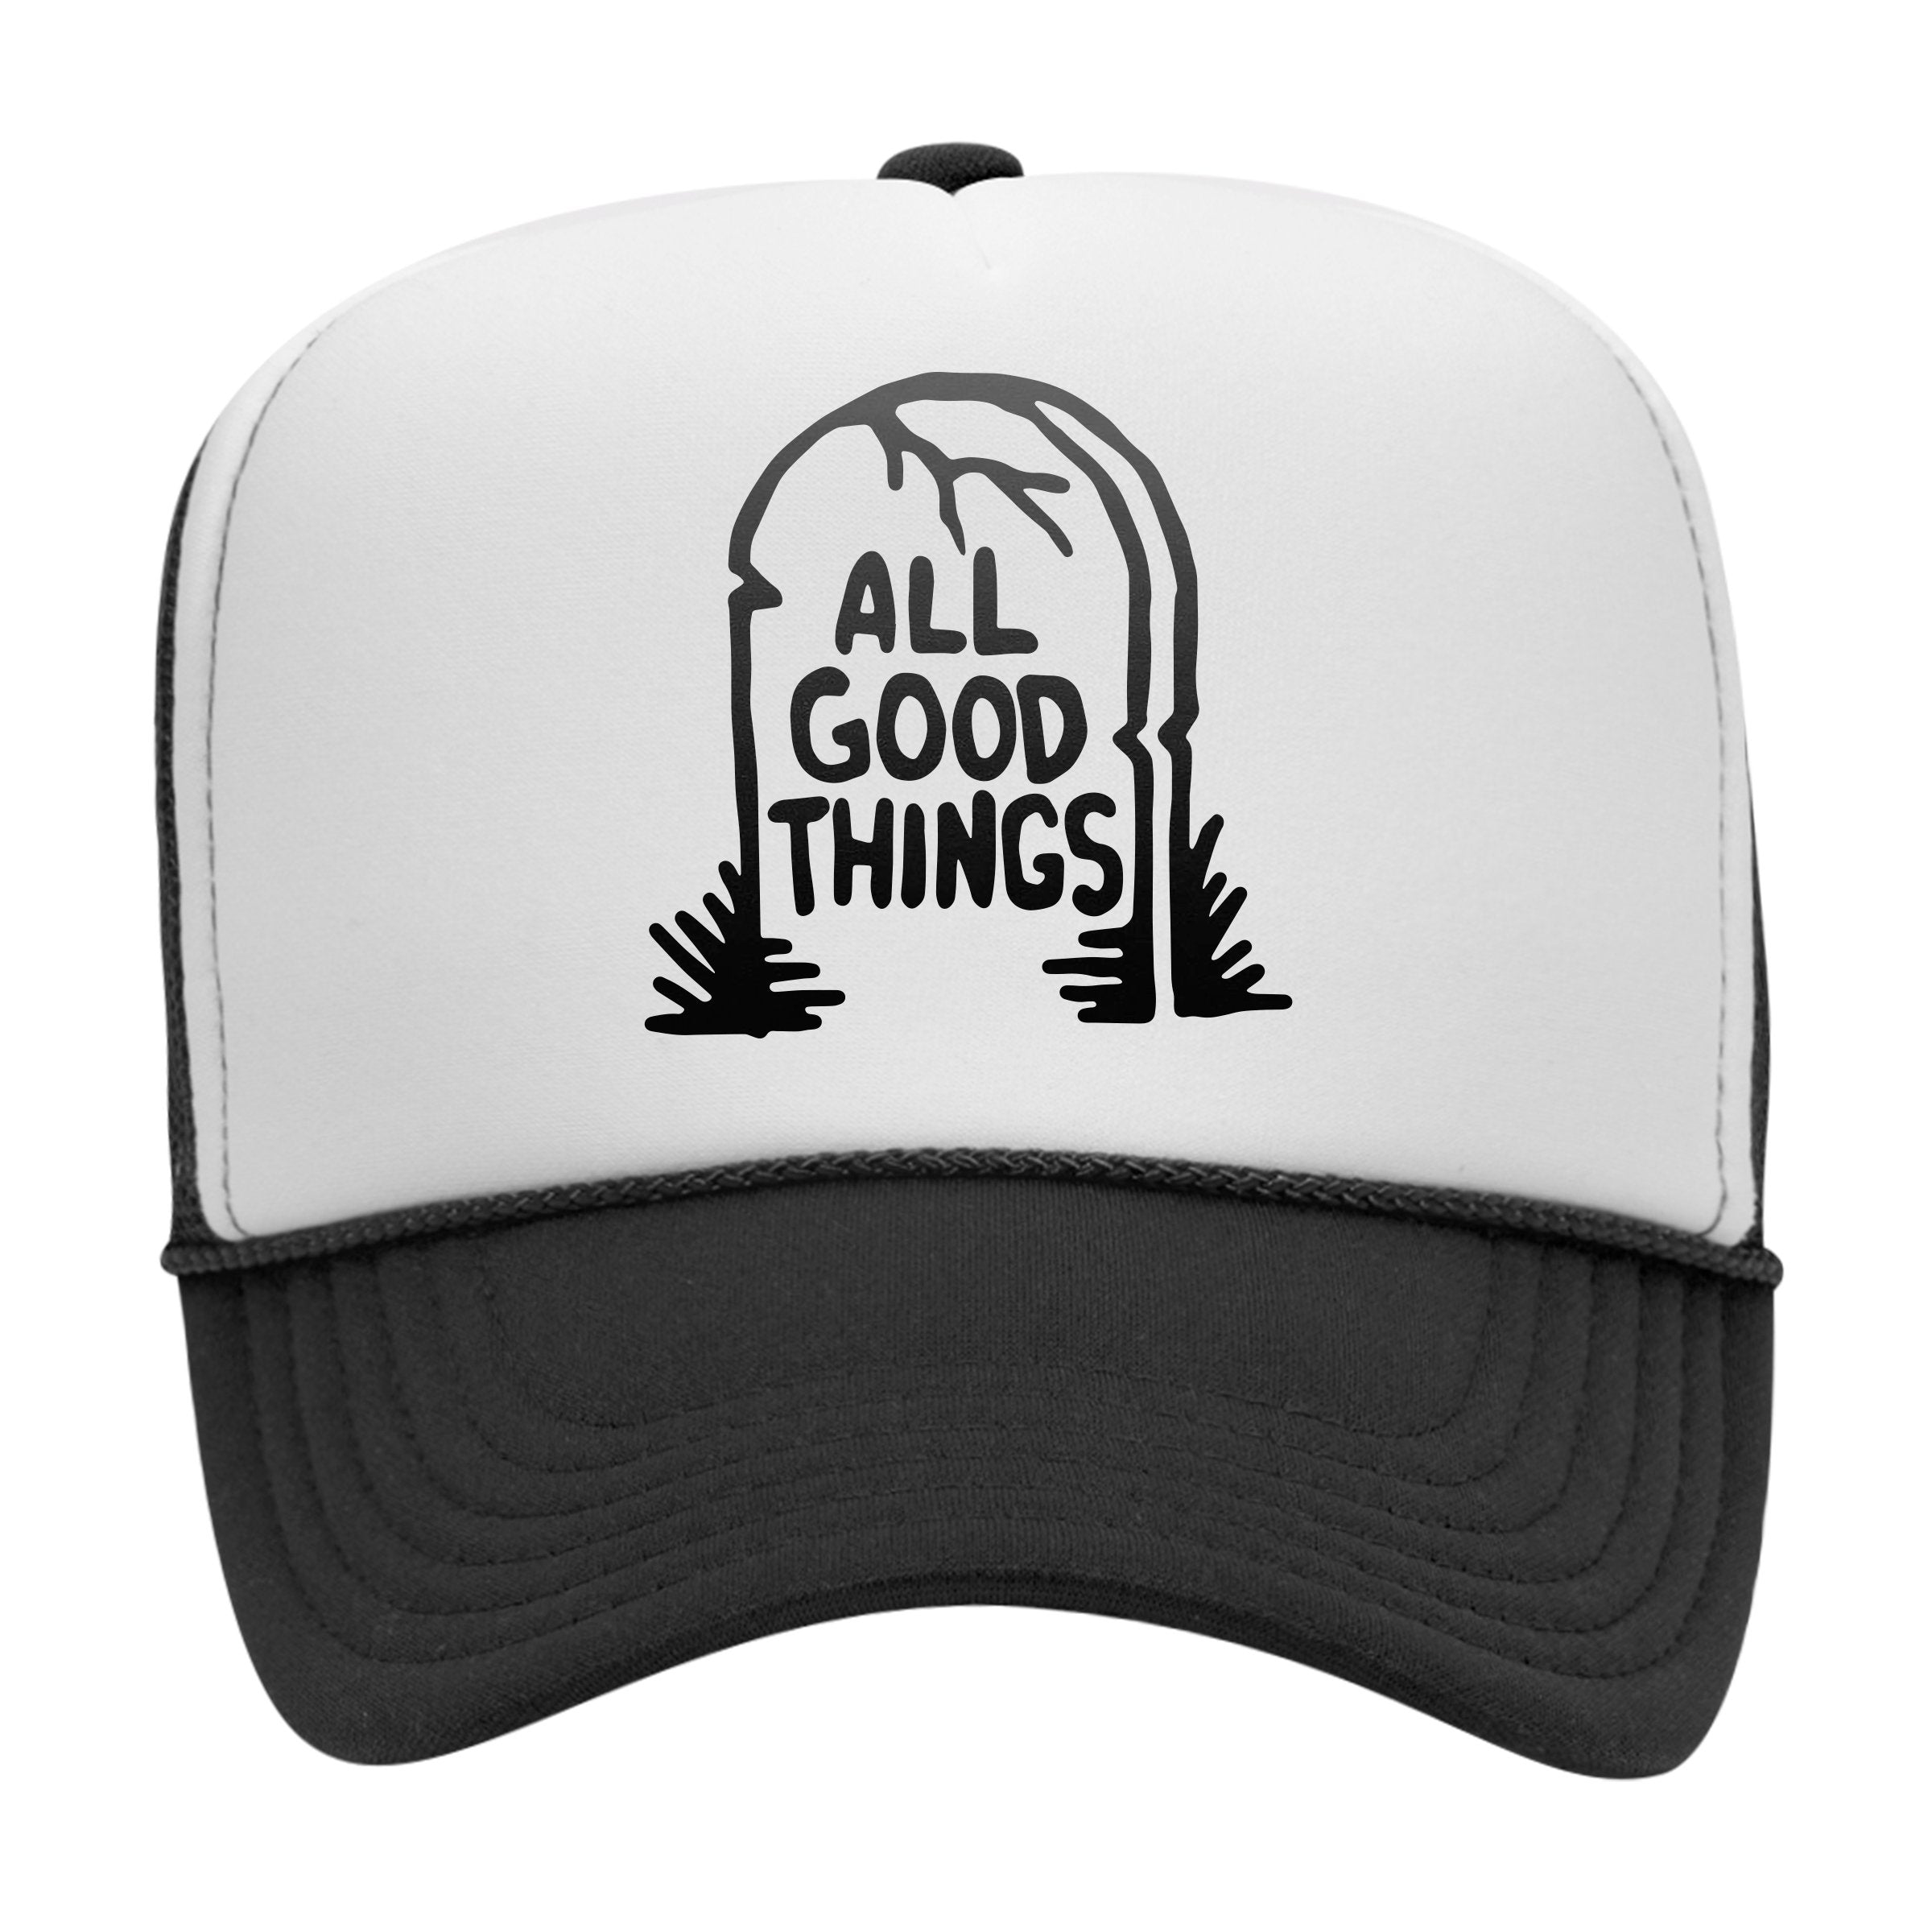 'GOOD THINGS' TRUCKER HAT